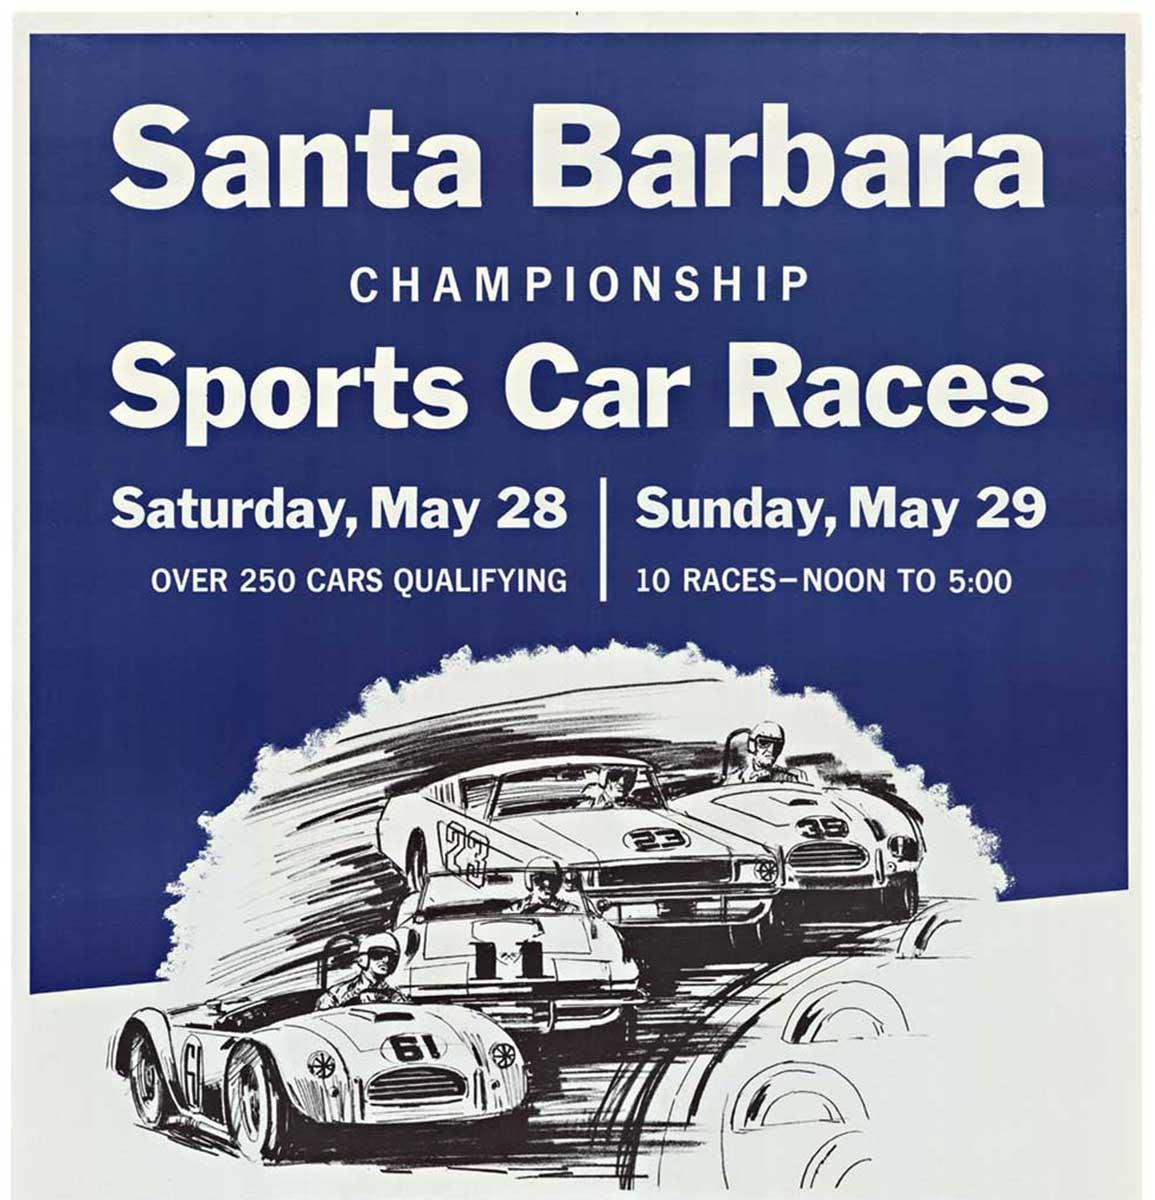 Original 1966 Santa Barbara Sports Car Races Championship vintage poster - Print by Unknown